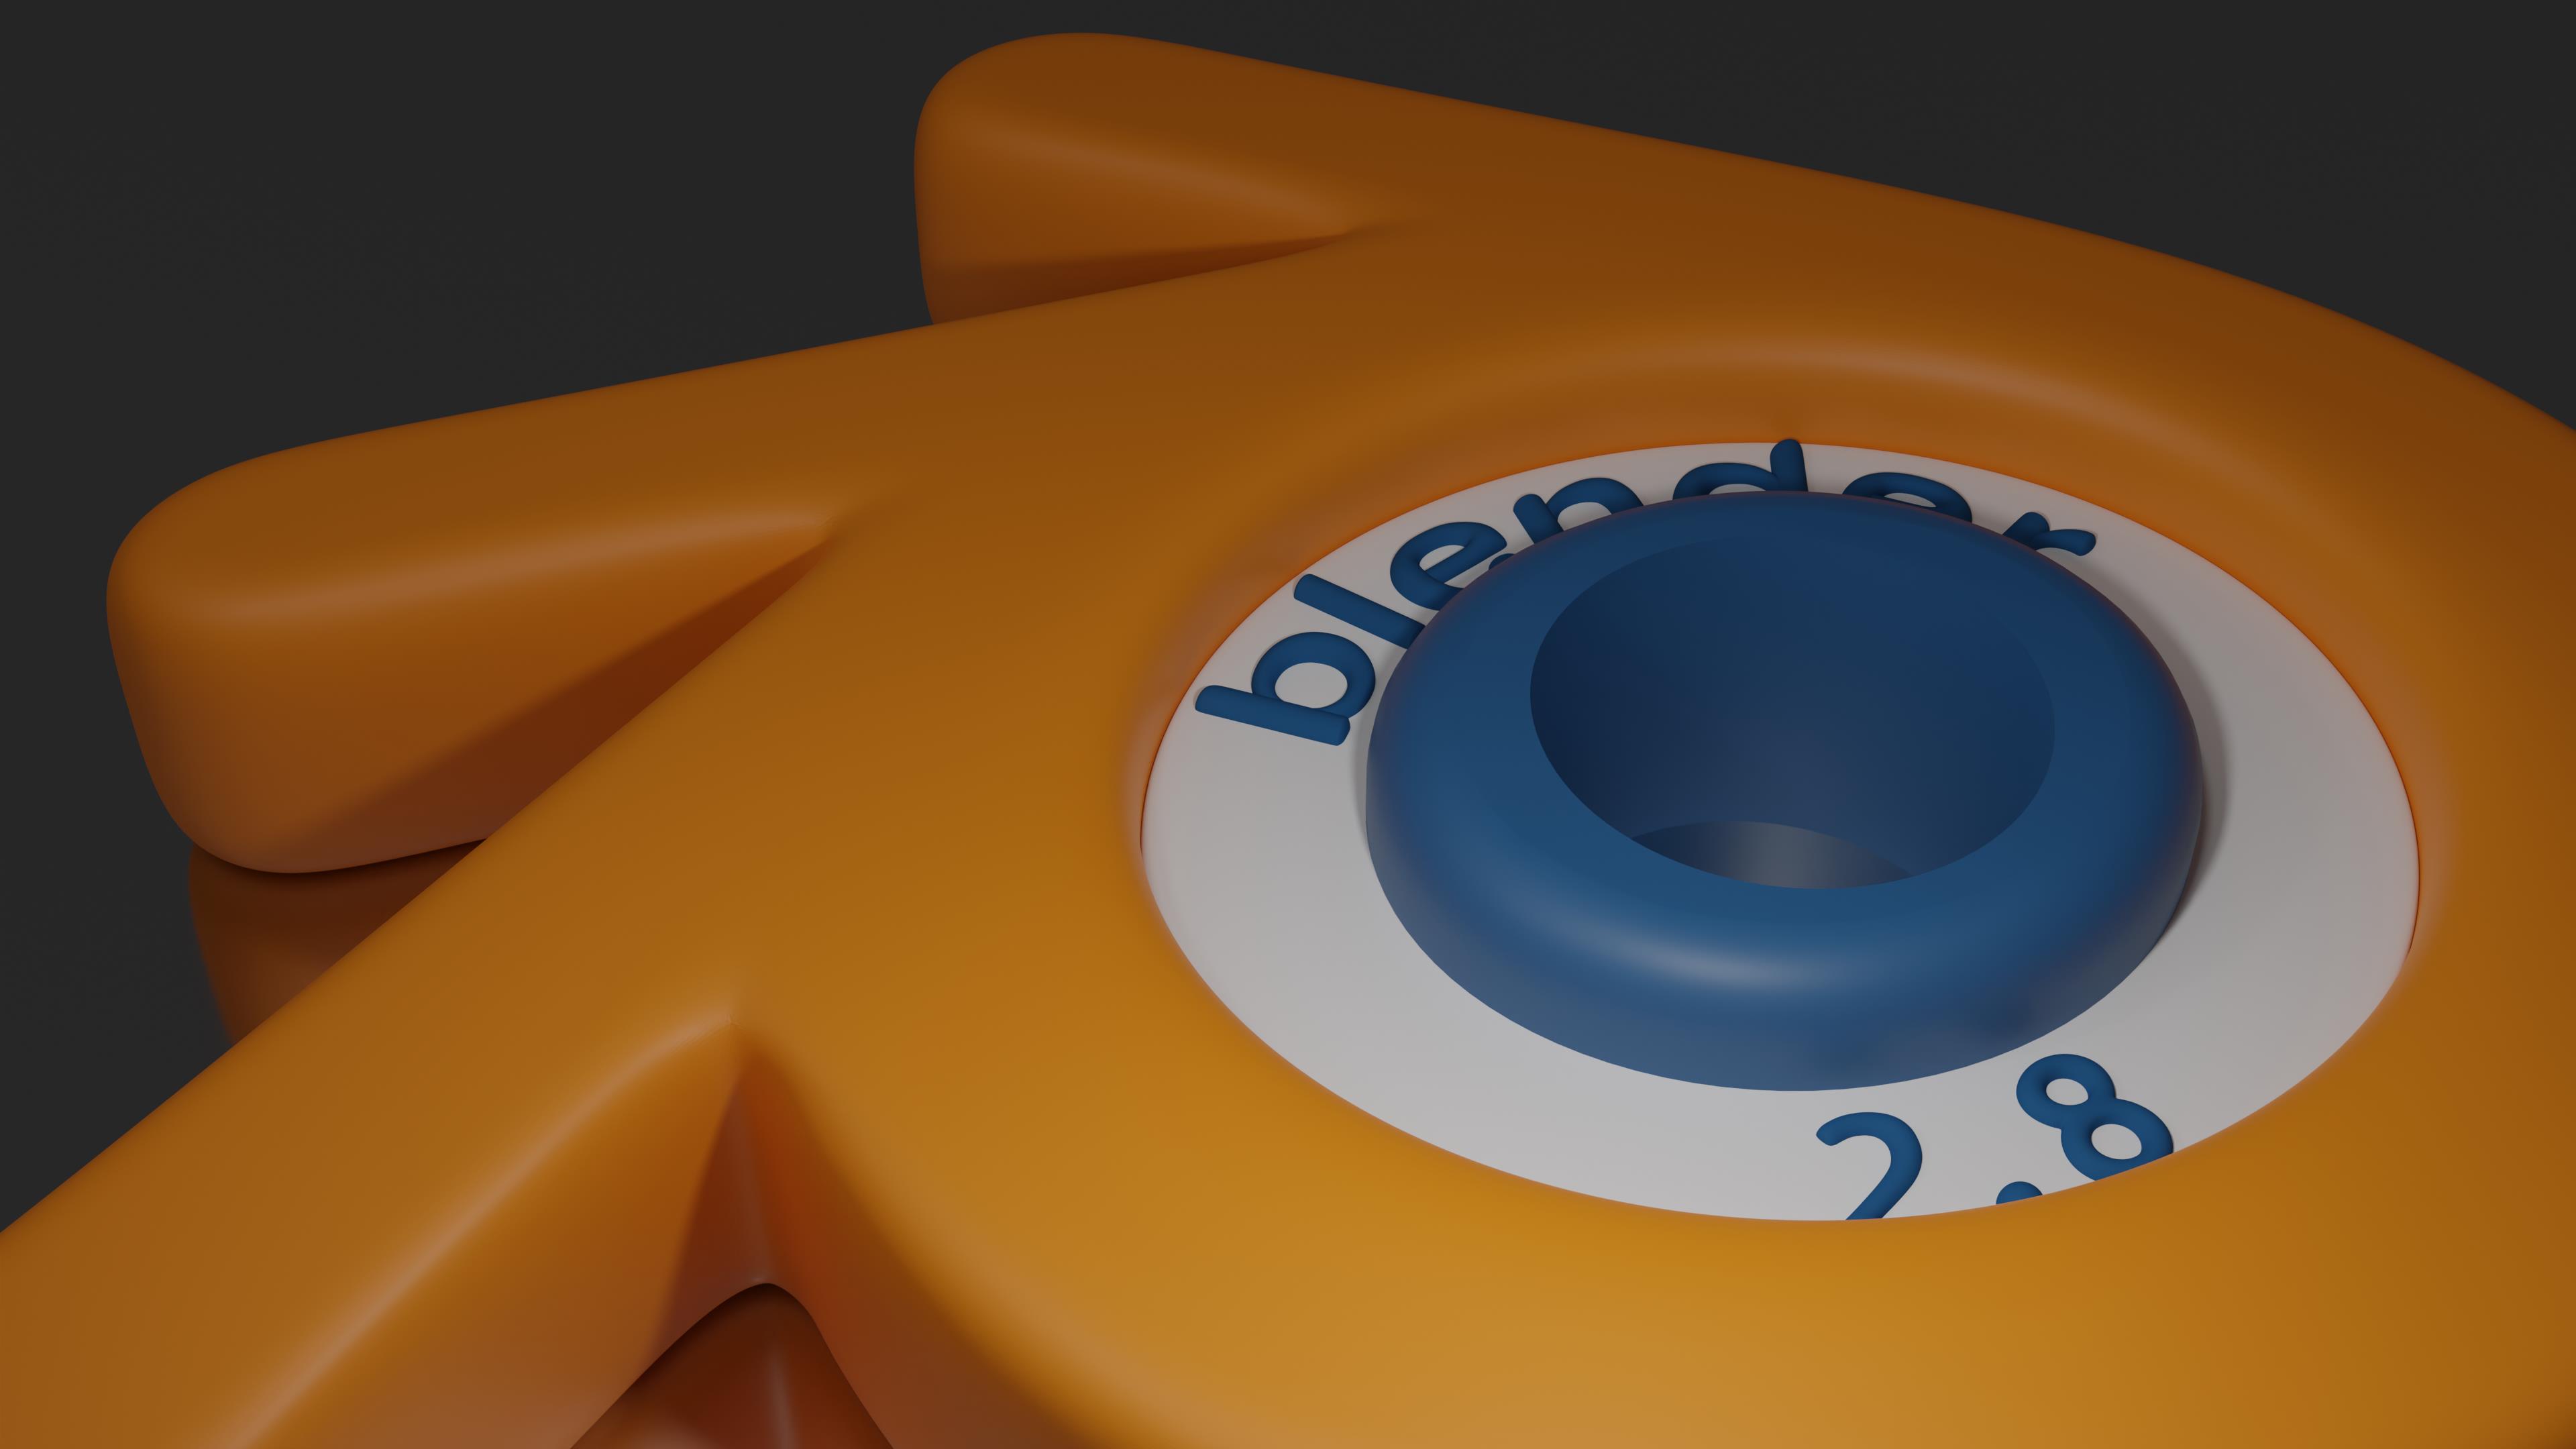 Blender-Dumbbell 2.8 preview image 3